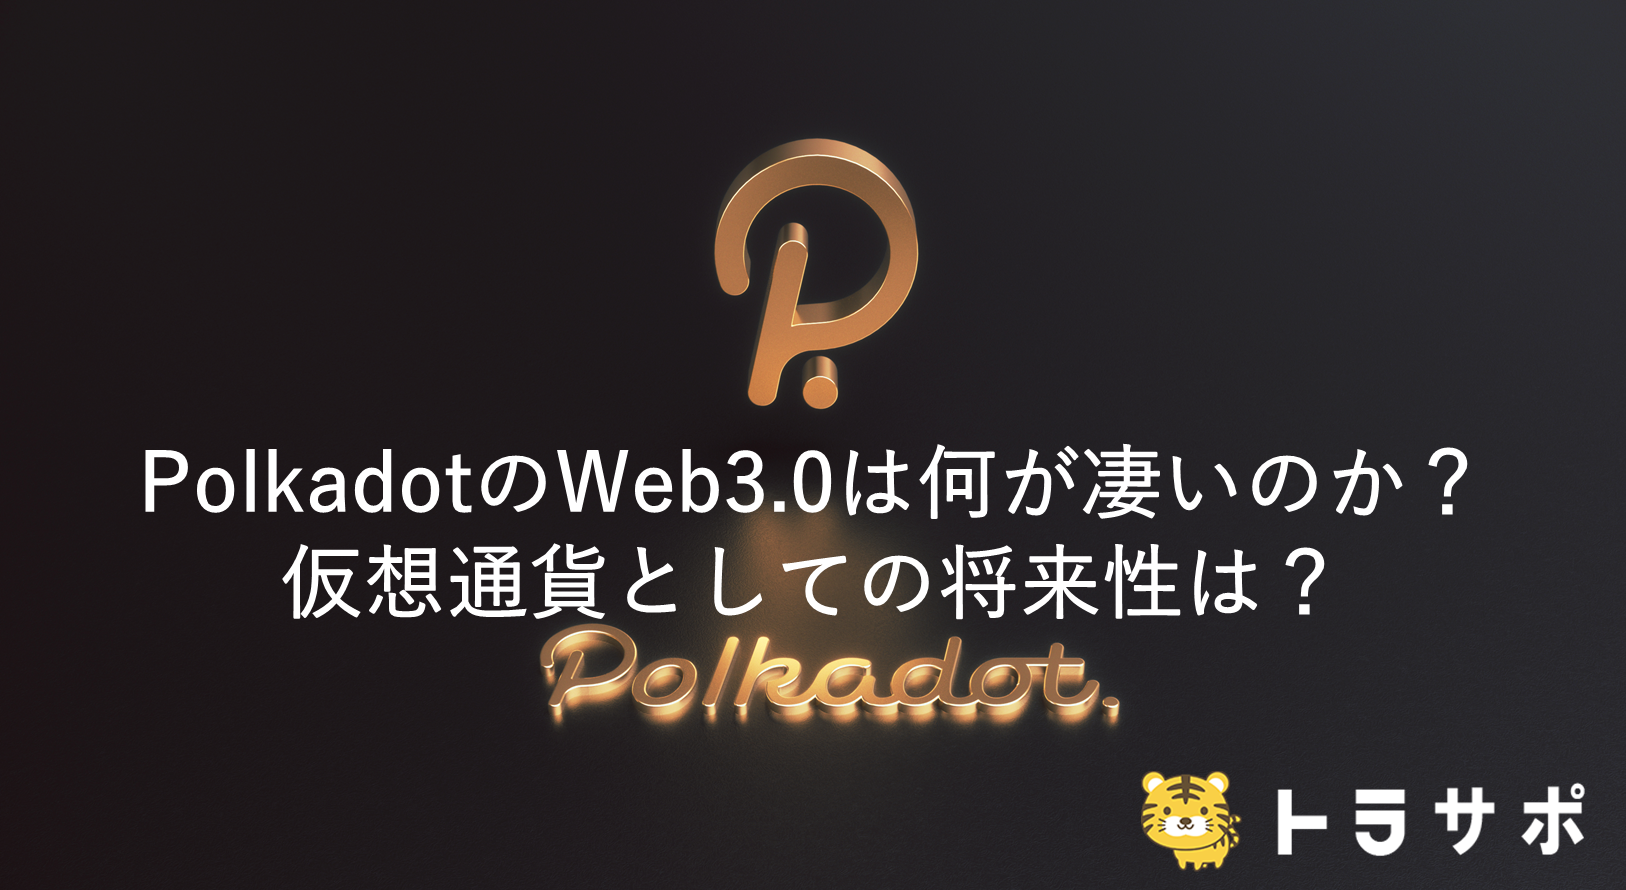 PolkadotのWeb3.0は何が凄いのか？仮想通貨としての将来性は？